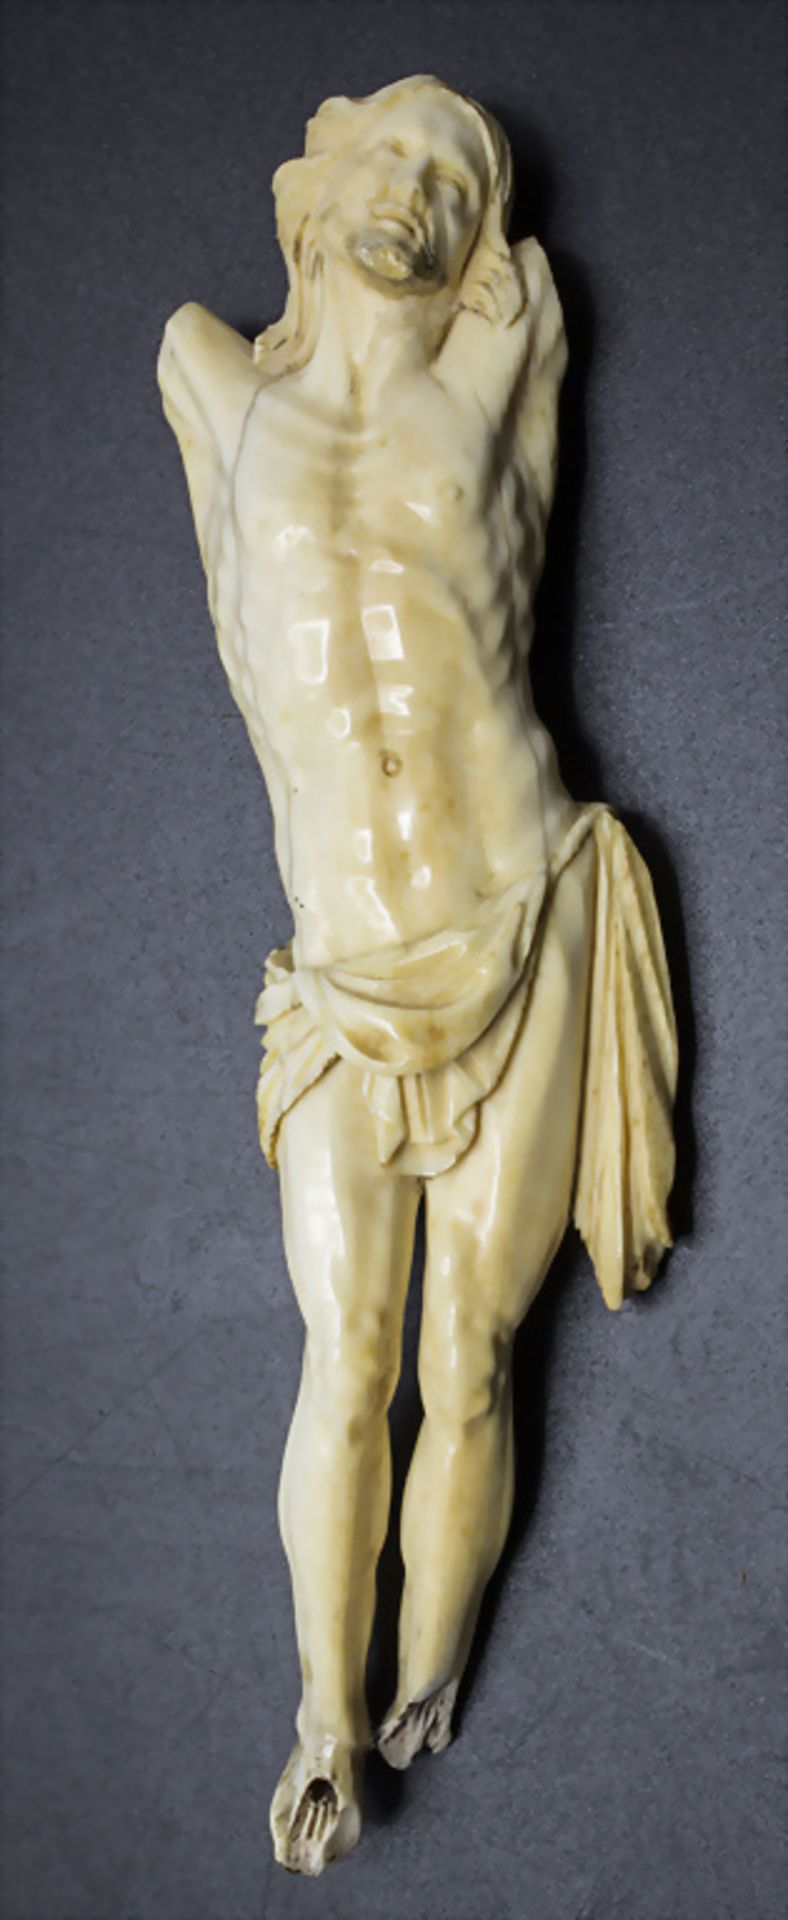 Elfenbeinfigur 'Corpus Christi' / An ivory figure 'Corpus Christi', 18. Jh.